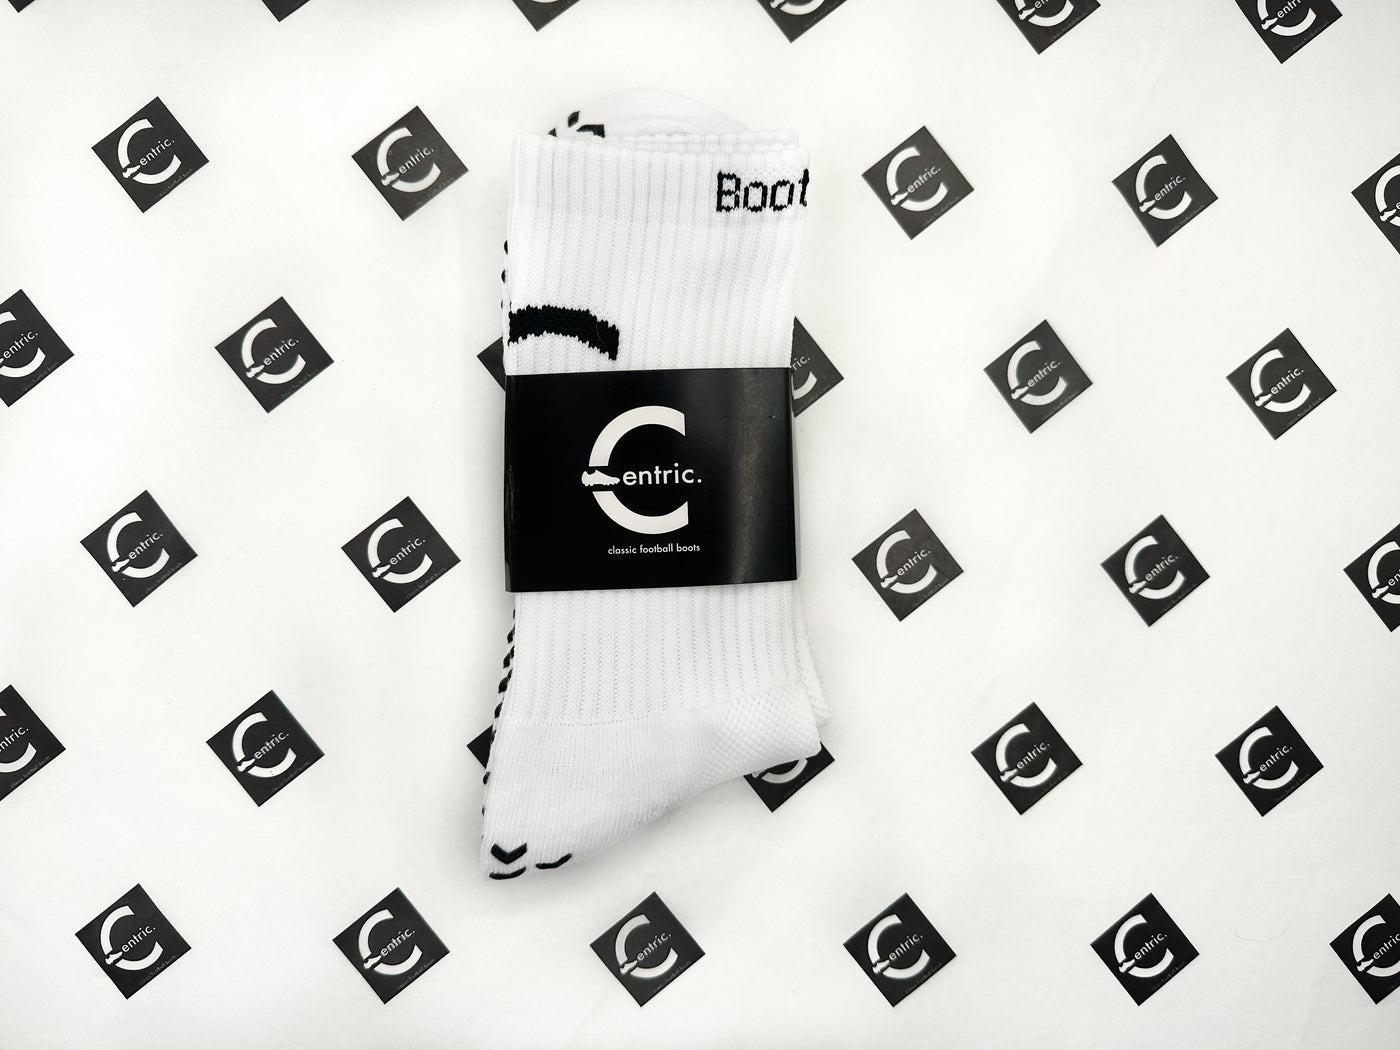 Bootscentric White Grip Socks - Bootscentric